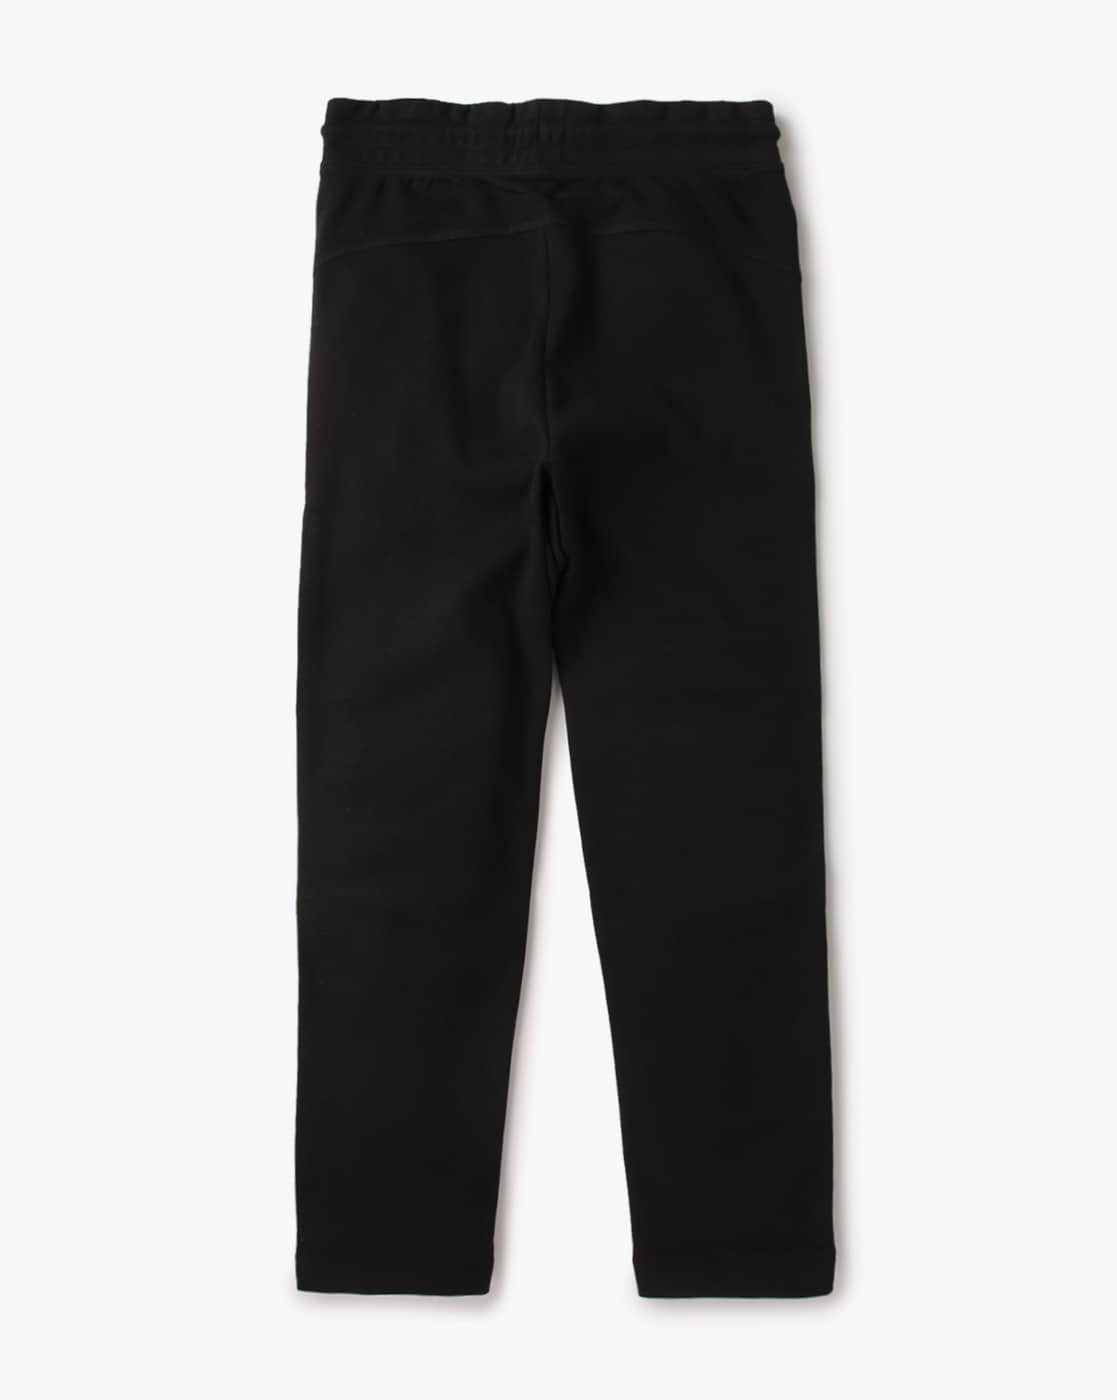 Buy RUFF Black Cotton Regular Fit Boys Pants | Shoppers Stop